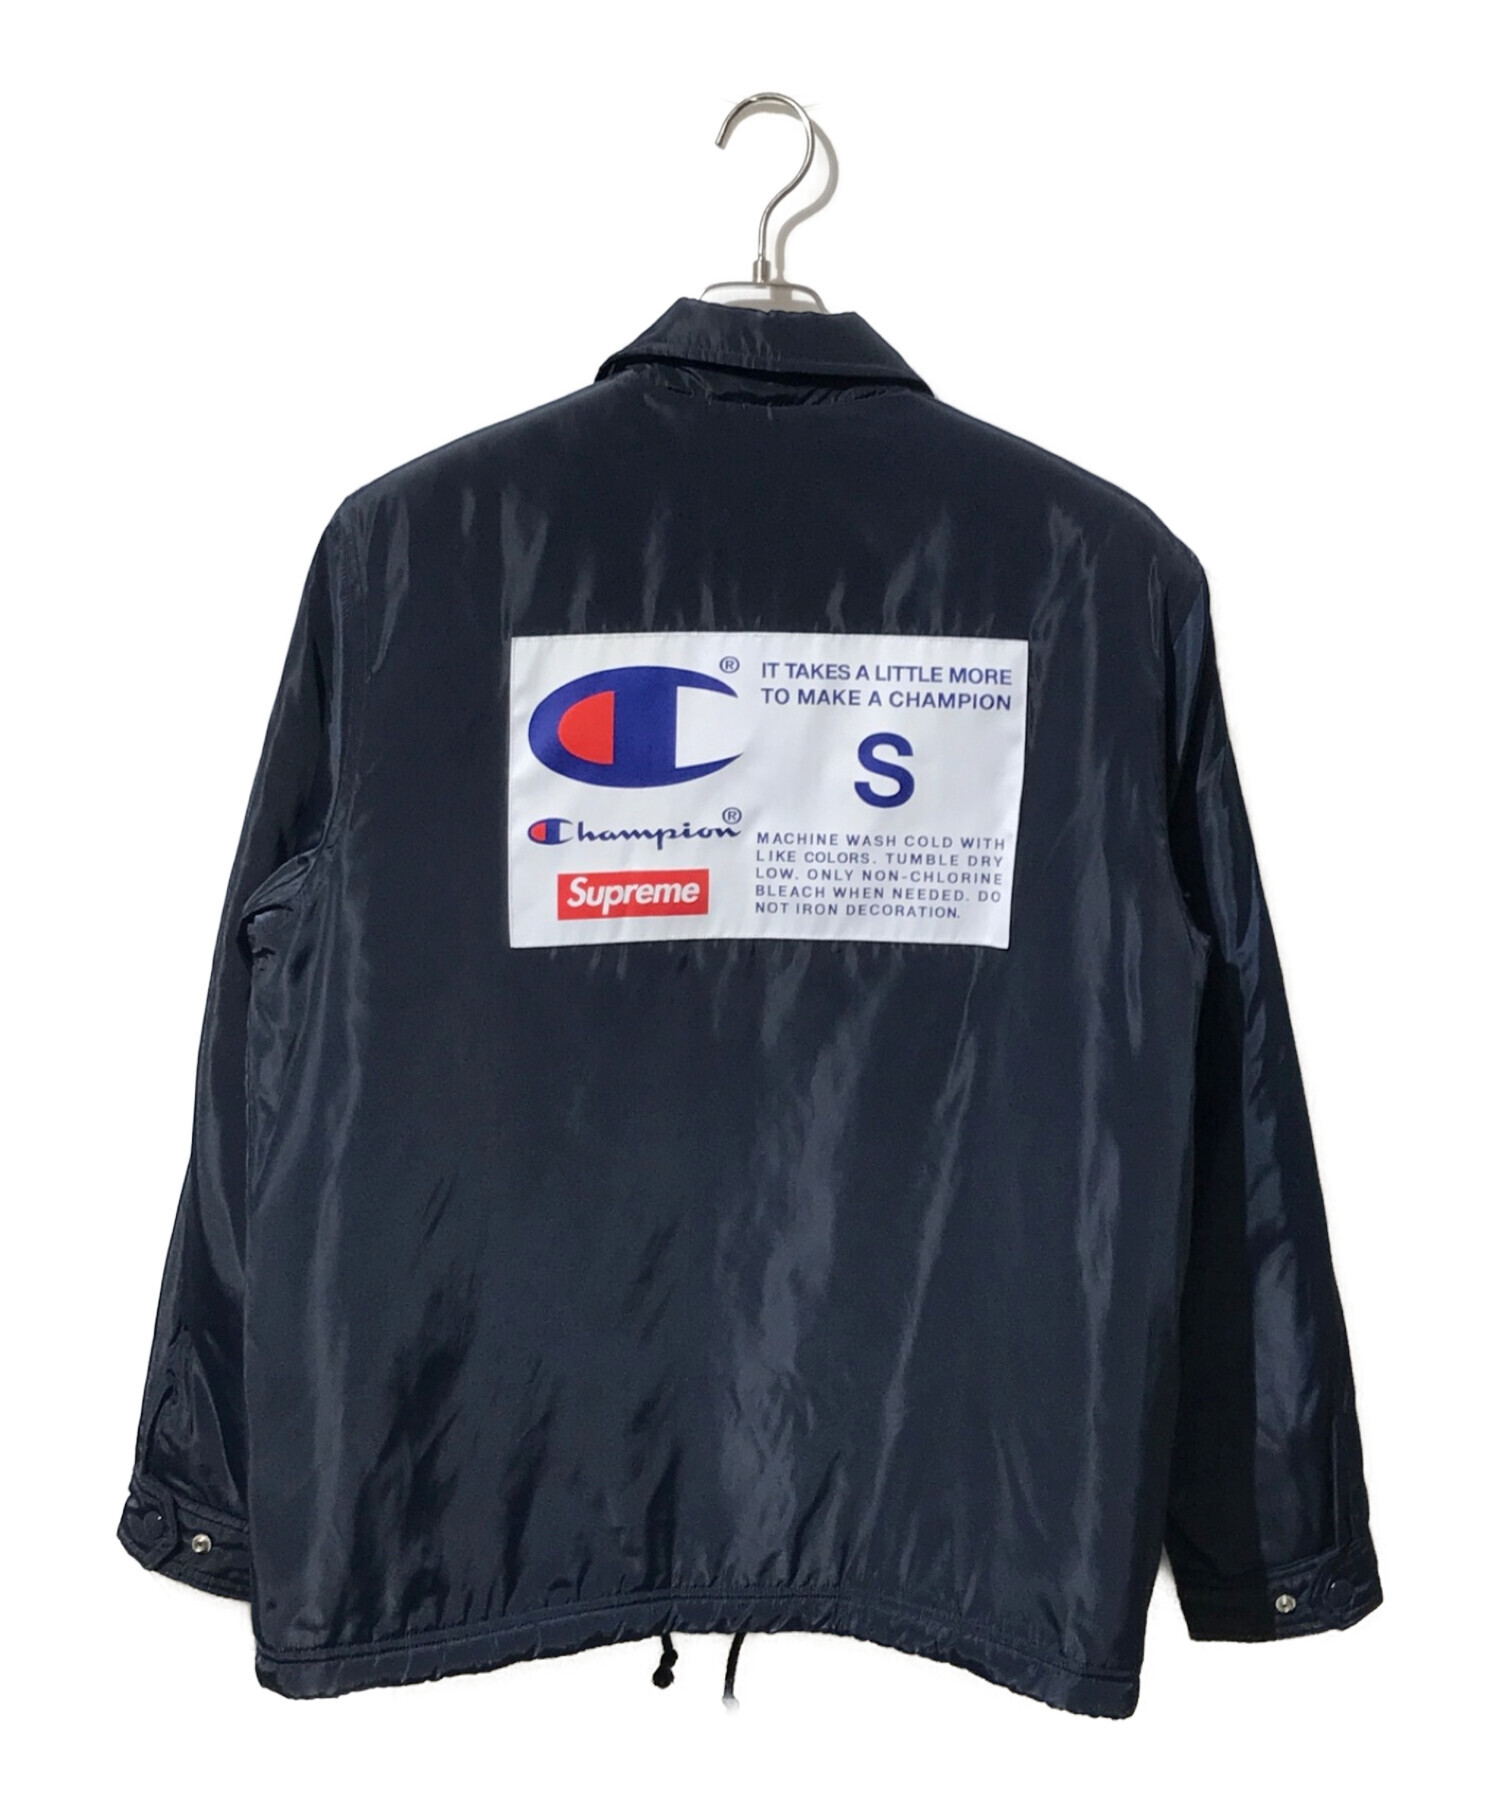 Champion (チャンピオン) SUPREME (シュプリーム) 18AW Label Coaches Jacket ネイビー サイズ:S